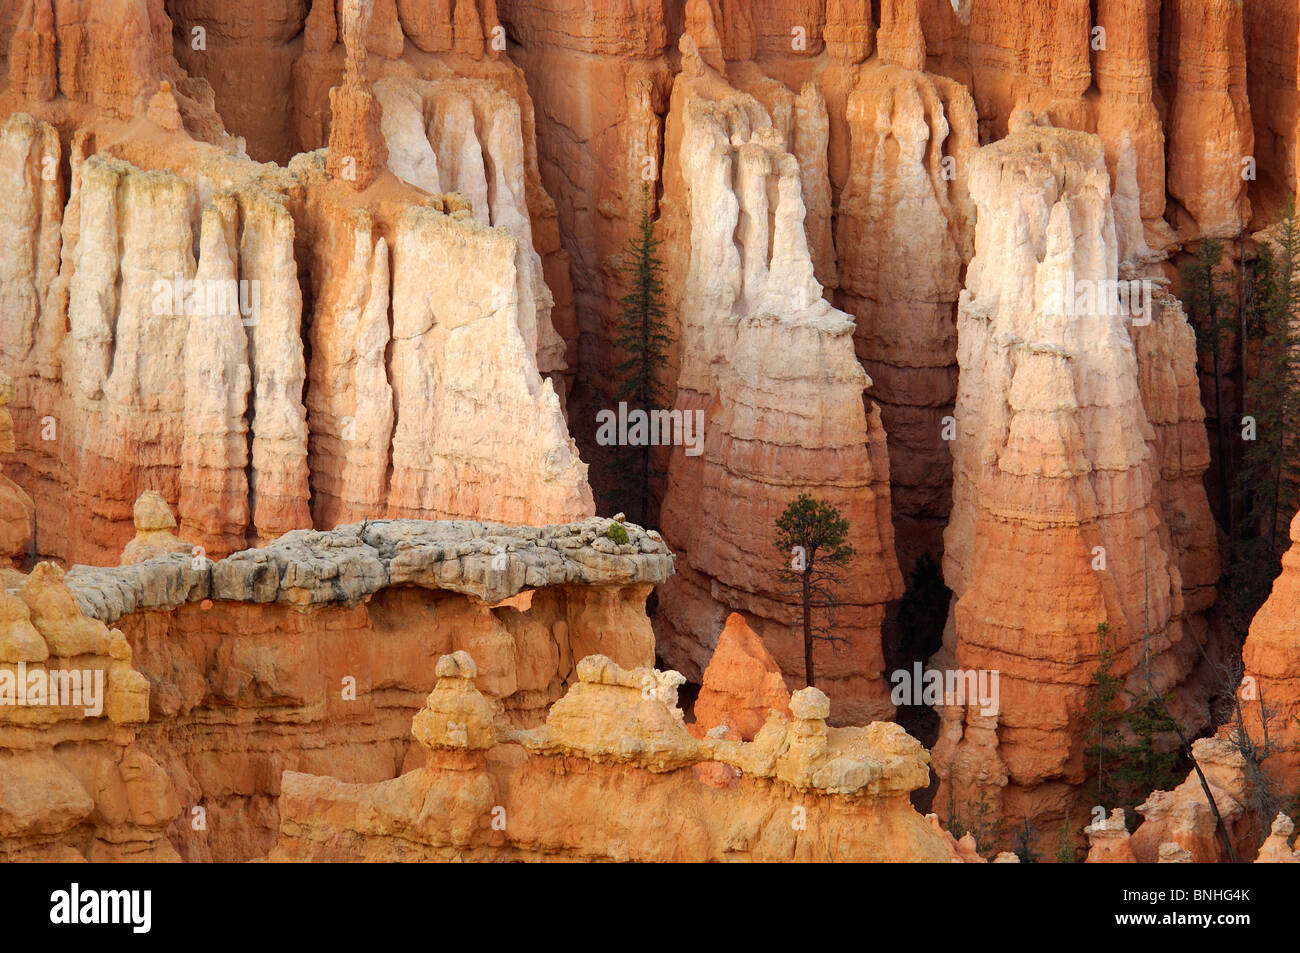 Usa Utah Inspiration Point Bryce Canyon National Park Landscape Scenery Rocks Rock Craggy Erosion Pinnacles Eroded Stock Photo